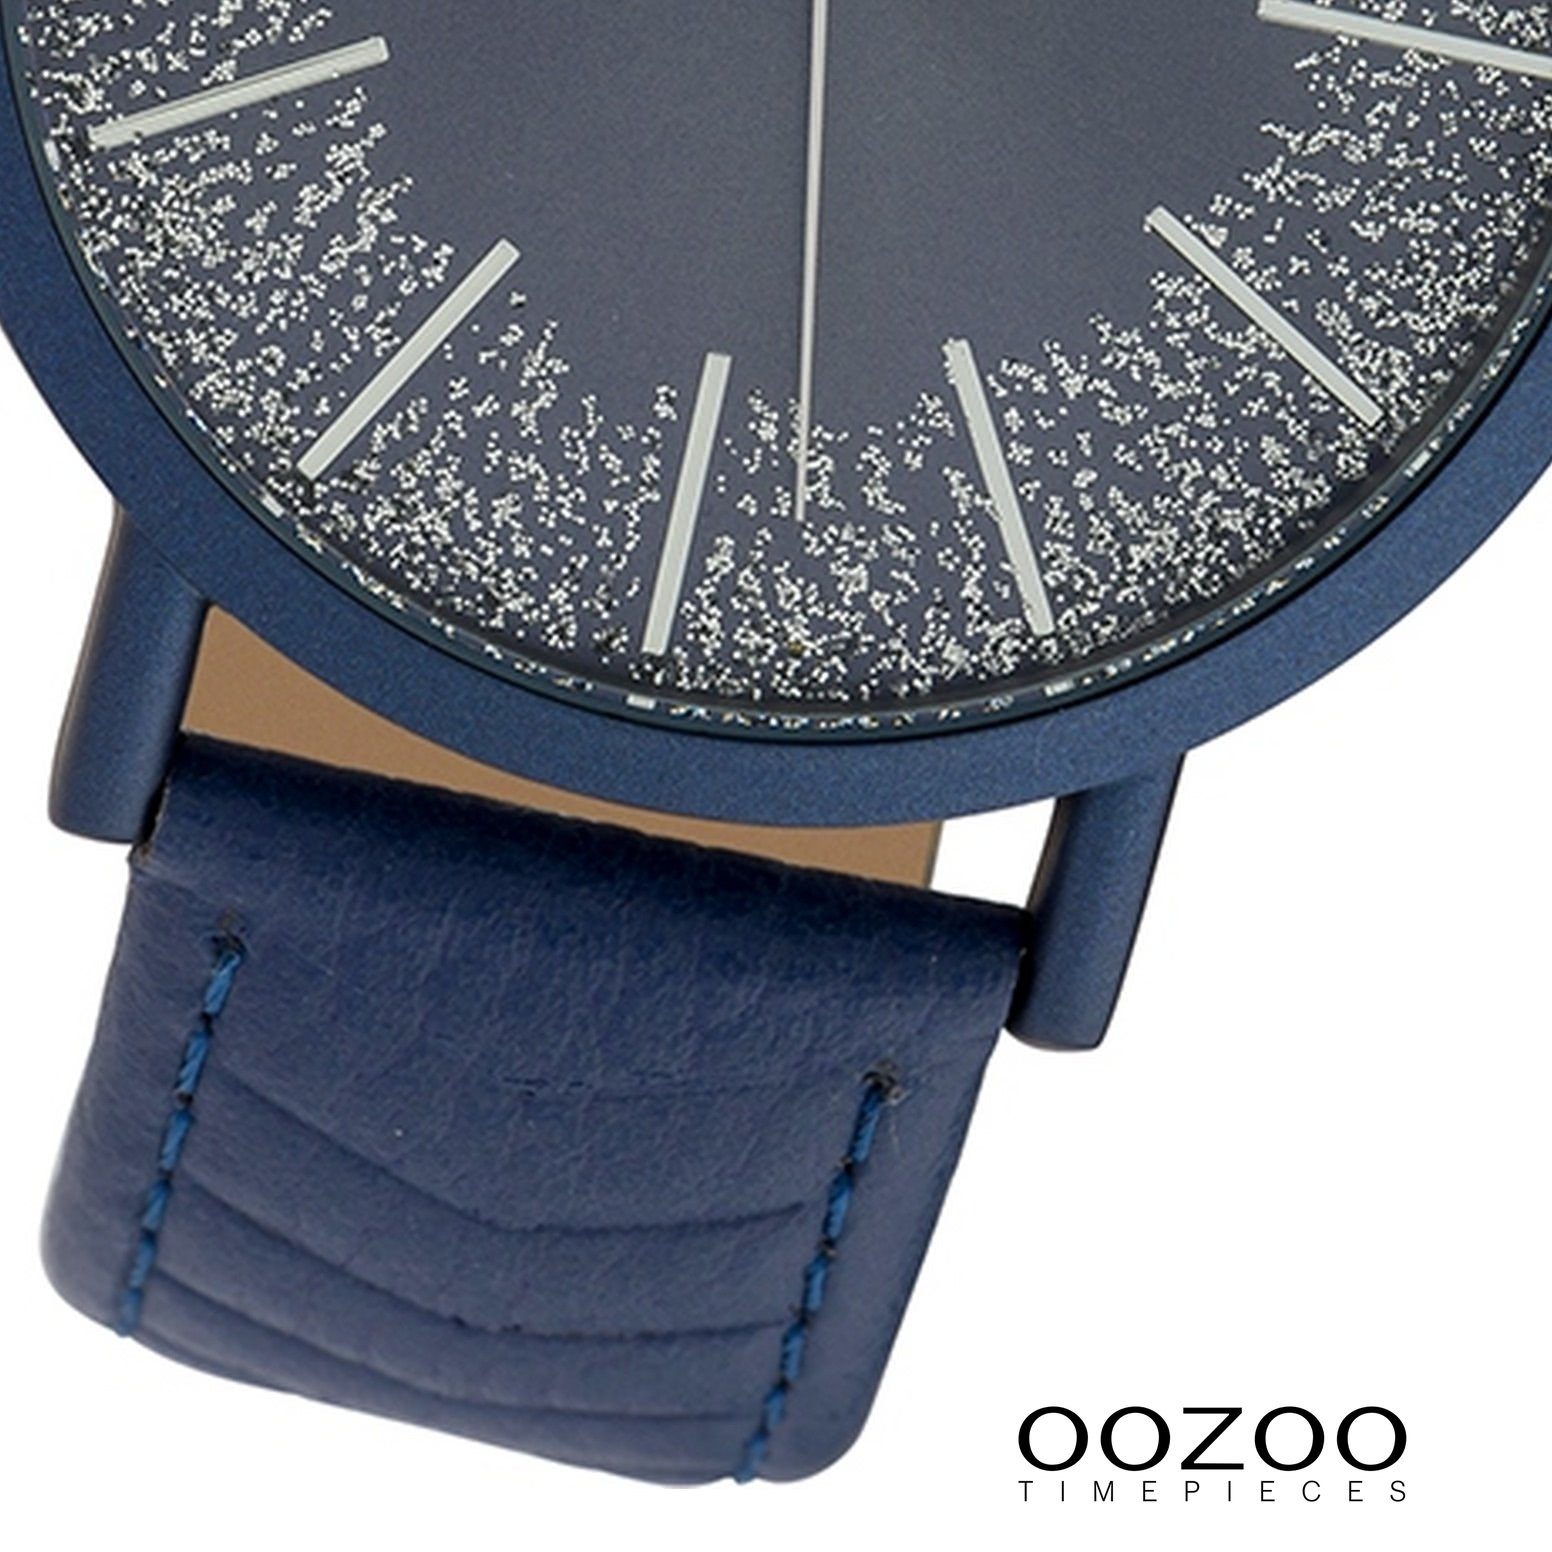 OOZOO groß rund, Damen-Uhr Quarzuhr dunkelblau, Oozoo 42mm), (ca. Damenuhr Lederarmband dunkelblau, Fashion